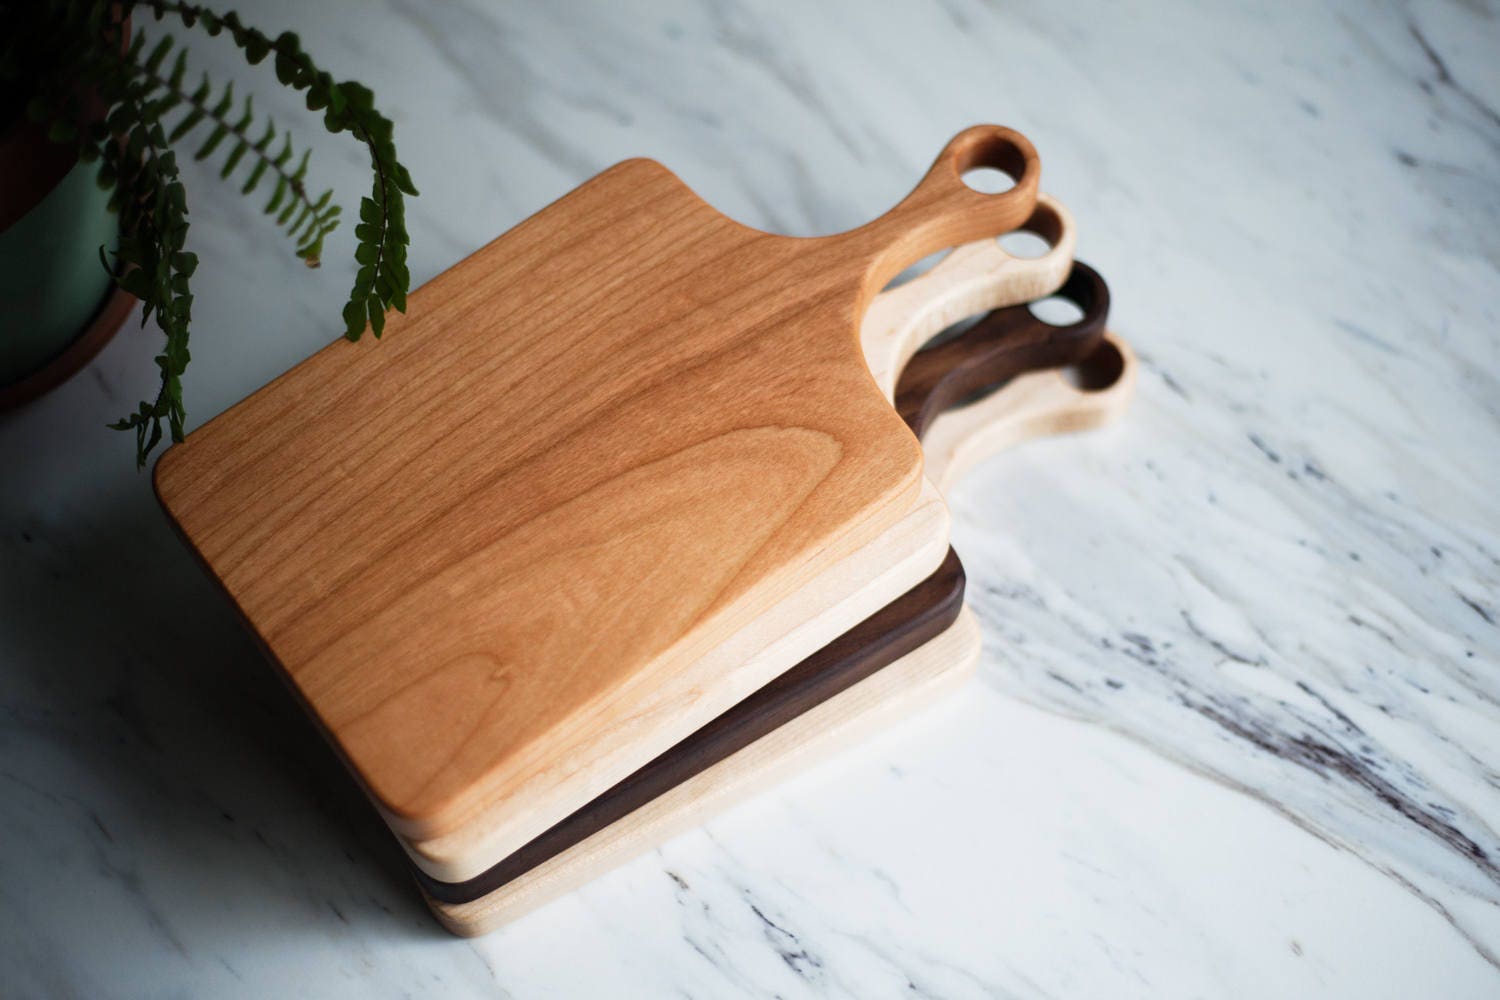 BarStash Wooden Cutting Board - Fine, Handmade Wood Boards for Kitchen, Bar  - Large Chopping Boards Made From Naturally Seasoned, Fine, Natural Grain